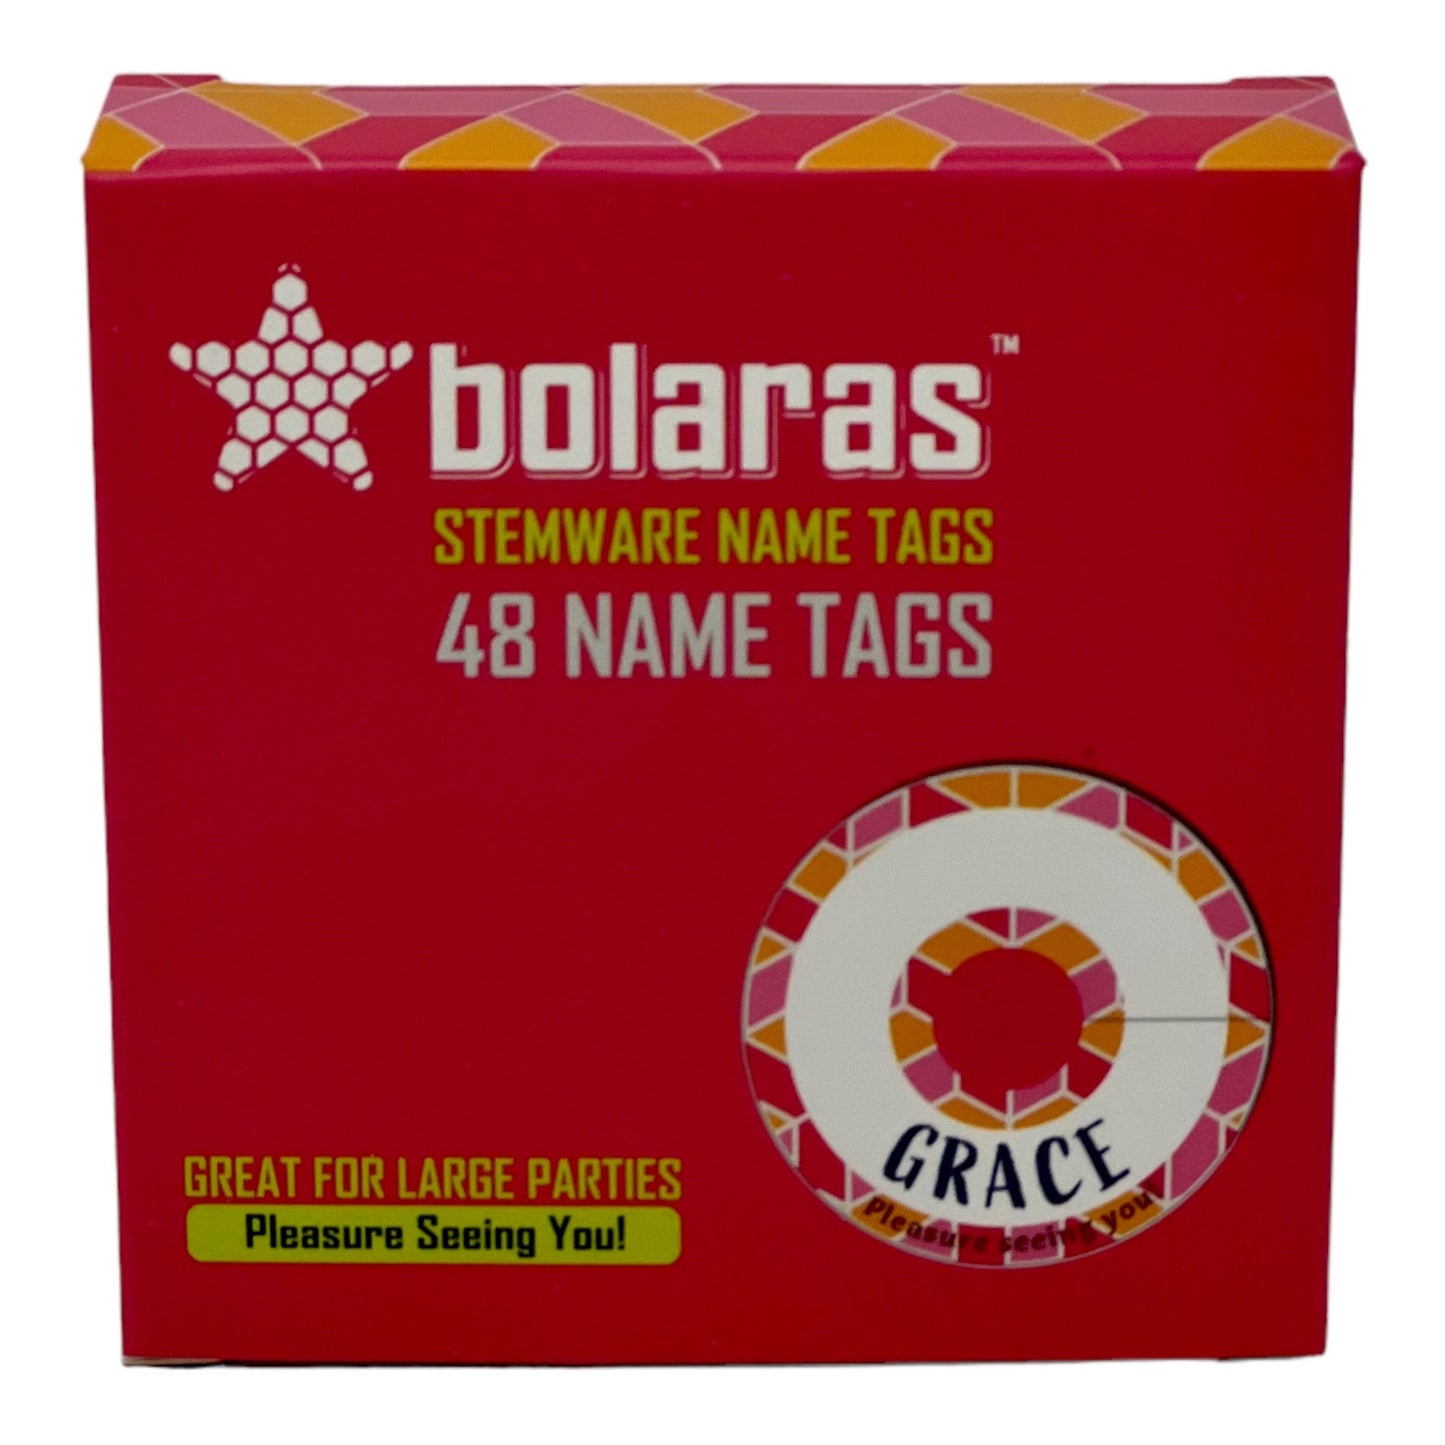 Bolaras Stemware Name Tags - Pleasure Seeing You! - (48 Tags)